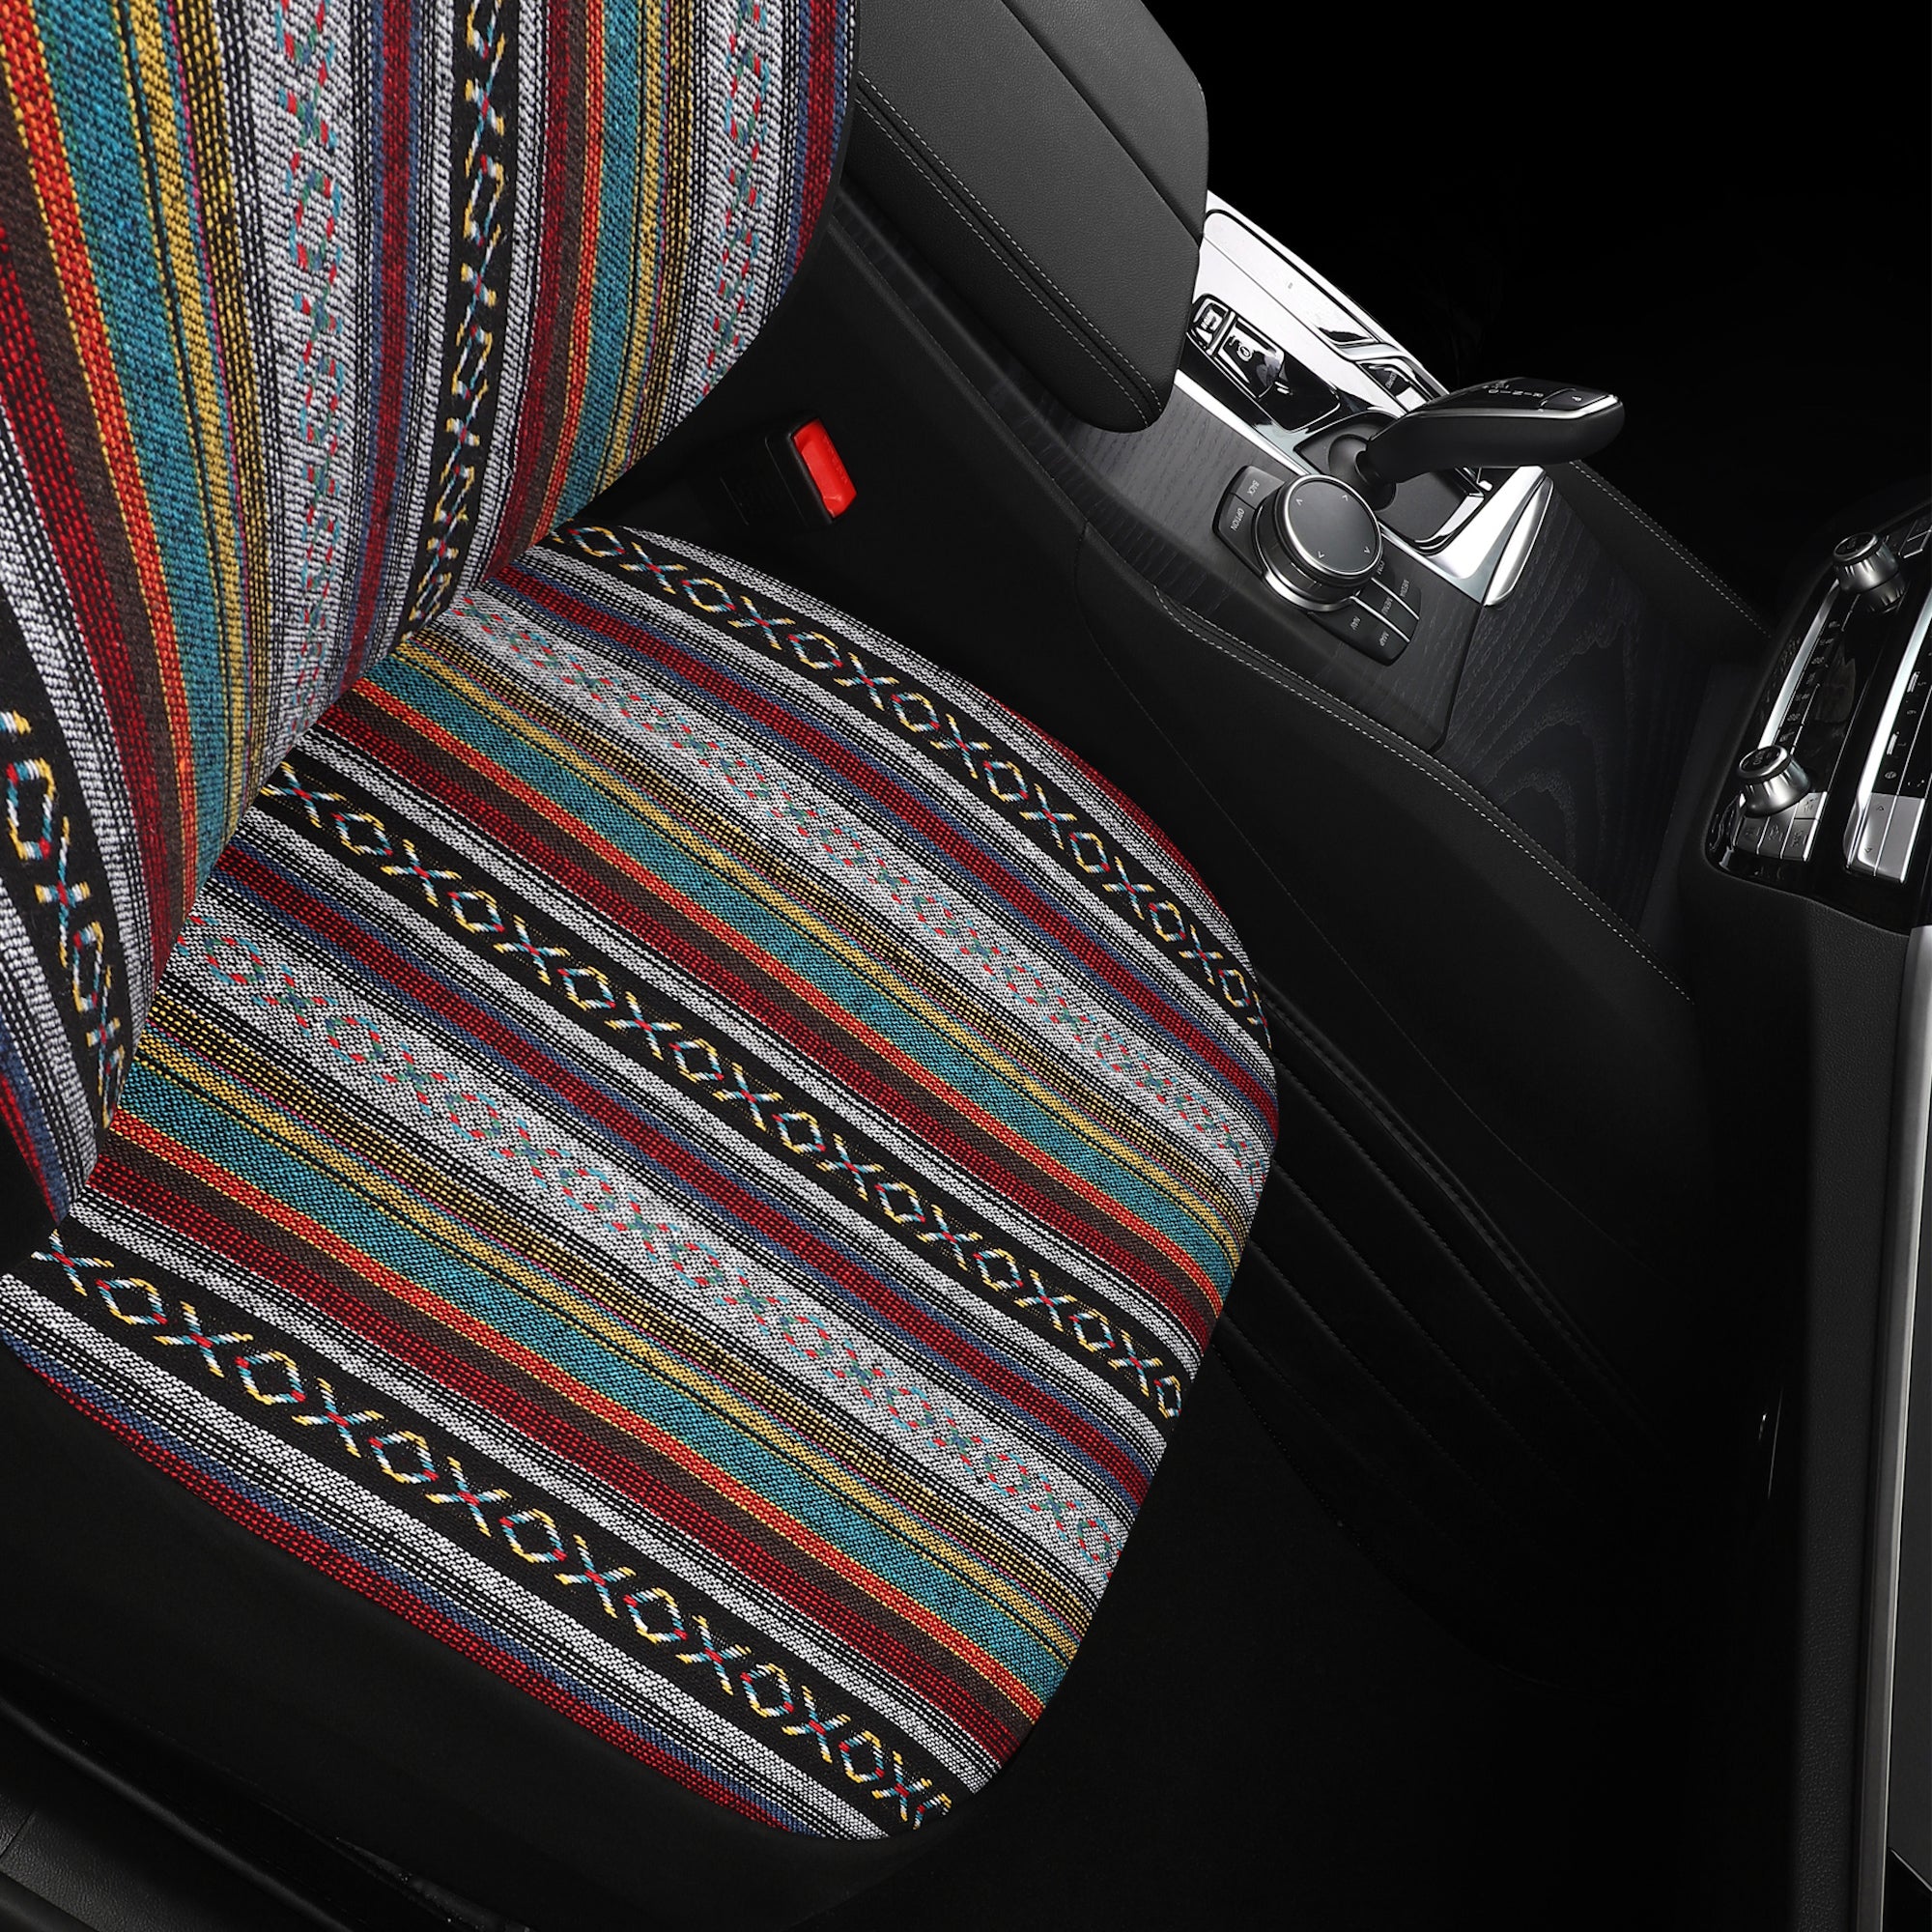  AKAUTO Baja Saddle Blanket Car Seat Covers Front Set